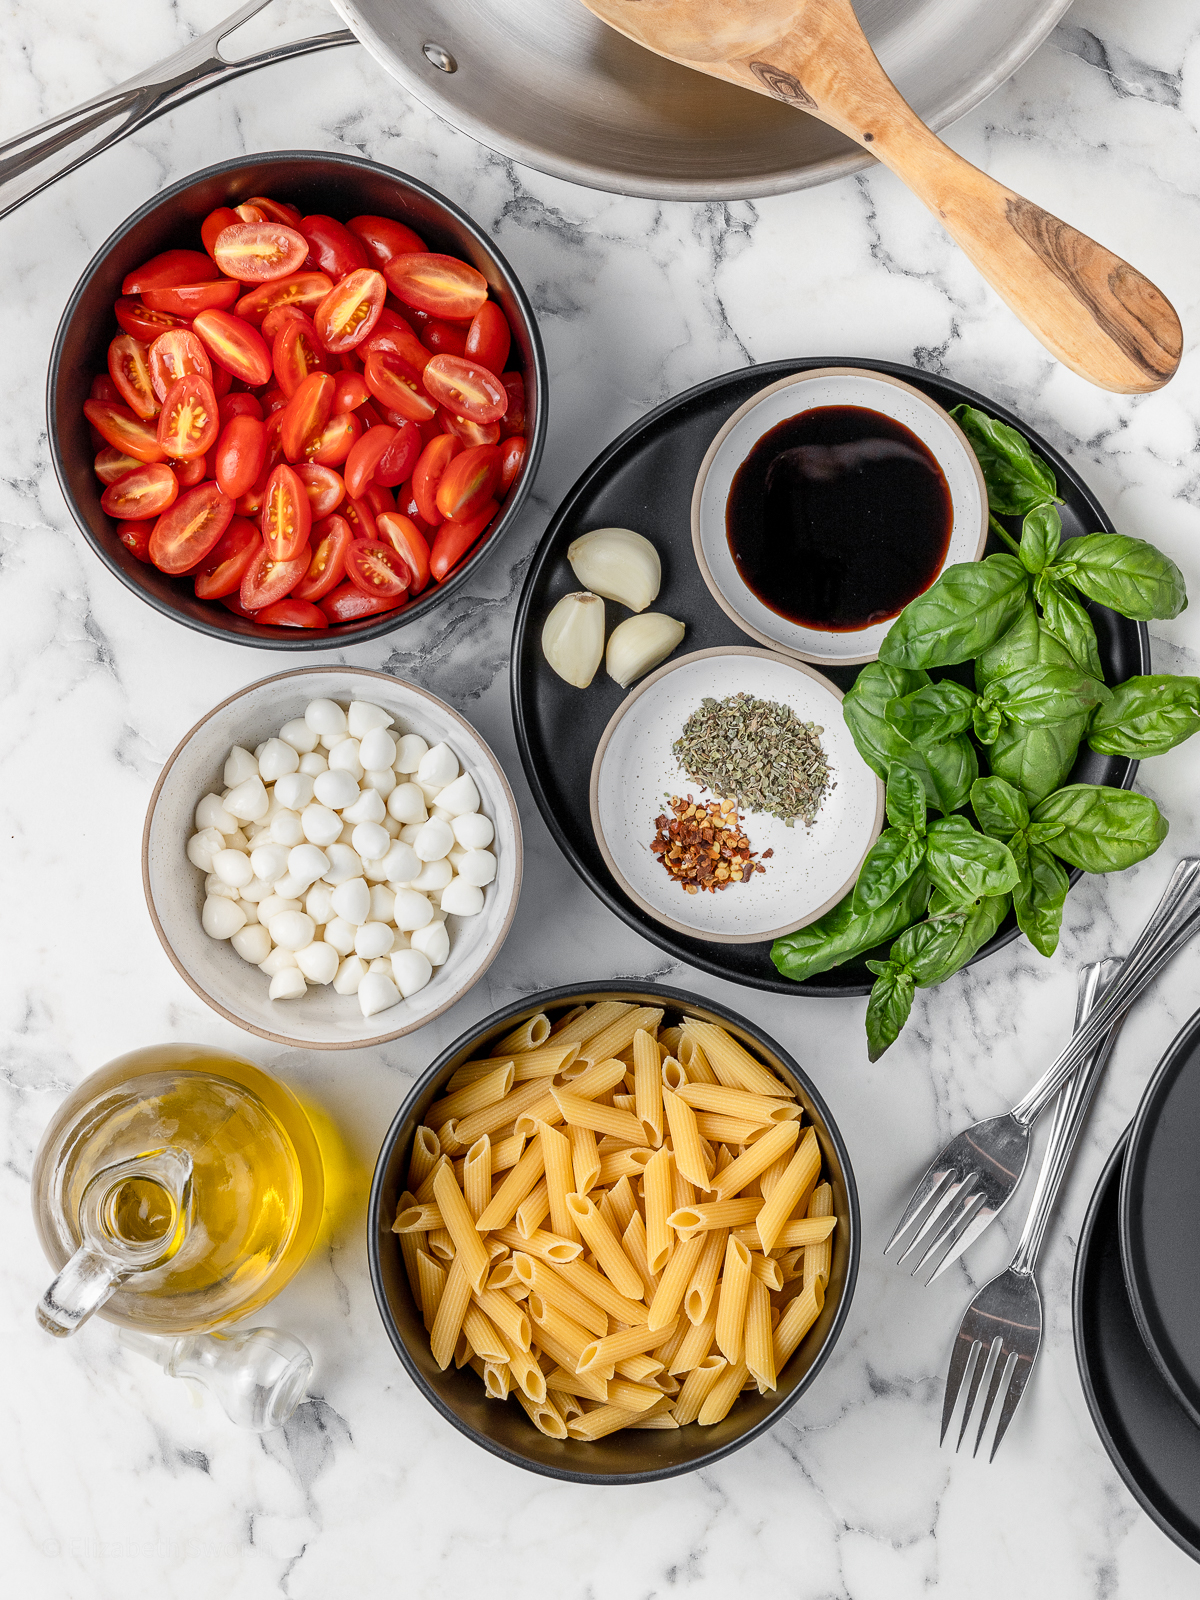 Ingredients. Penne pasta, cherry tomatoes, mozzarella pearls, fresh basil, fresh garlic, olive oil, Italian seasoning, red pepper flakes, and balsamic glaze.